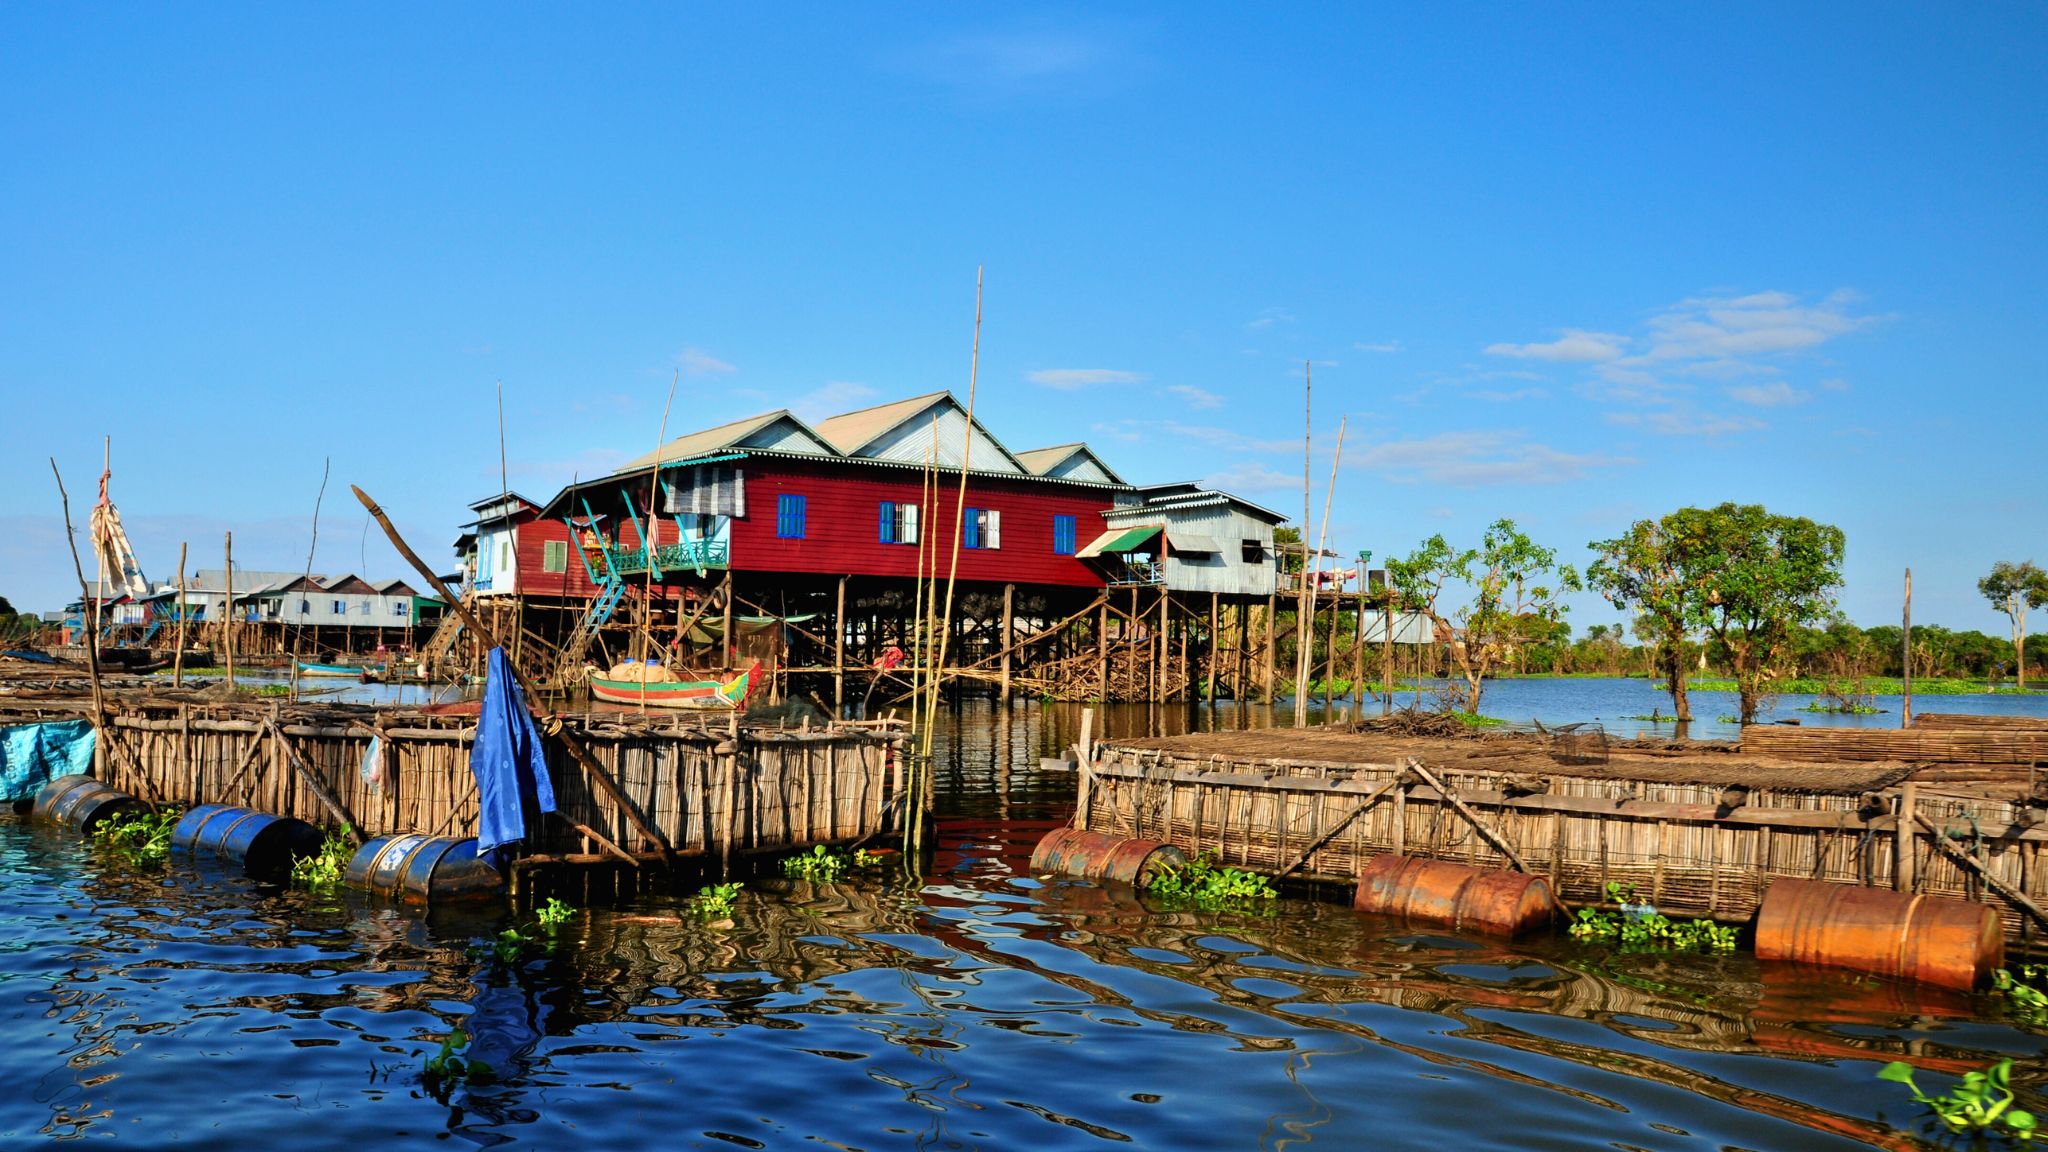 Day 1 Tonle Sap Lake Is Southeast Asia's Largest Lake